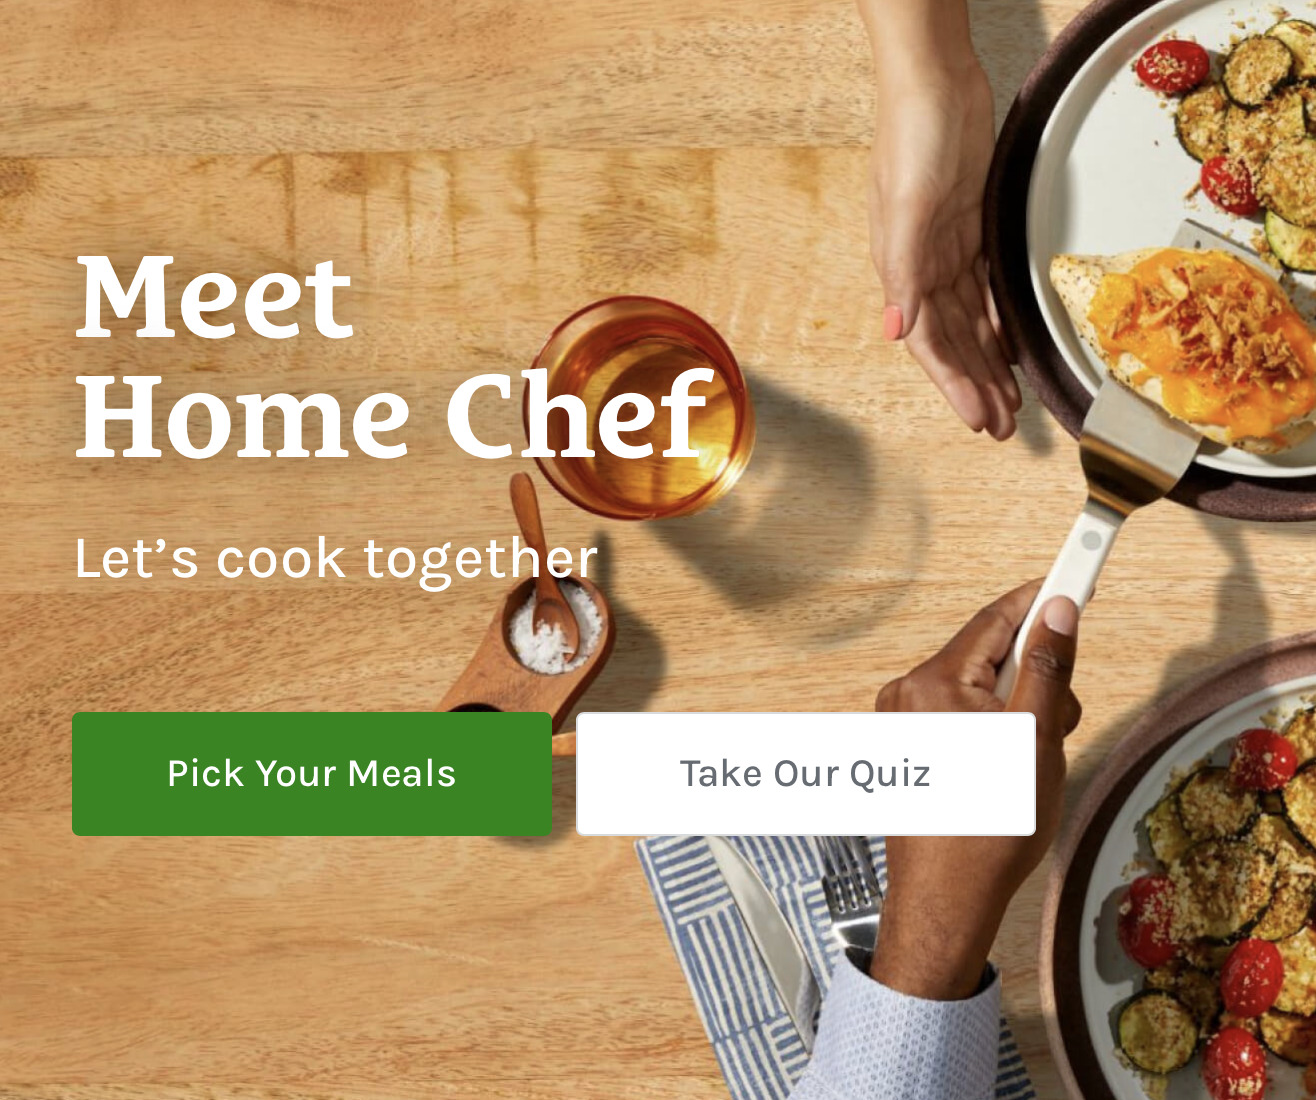 Meet Home Chef Meal Kits